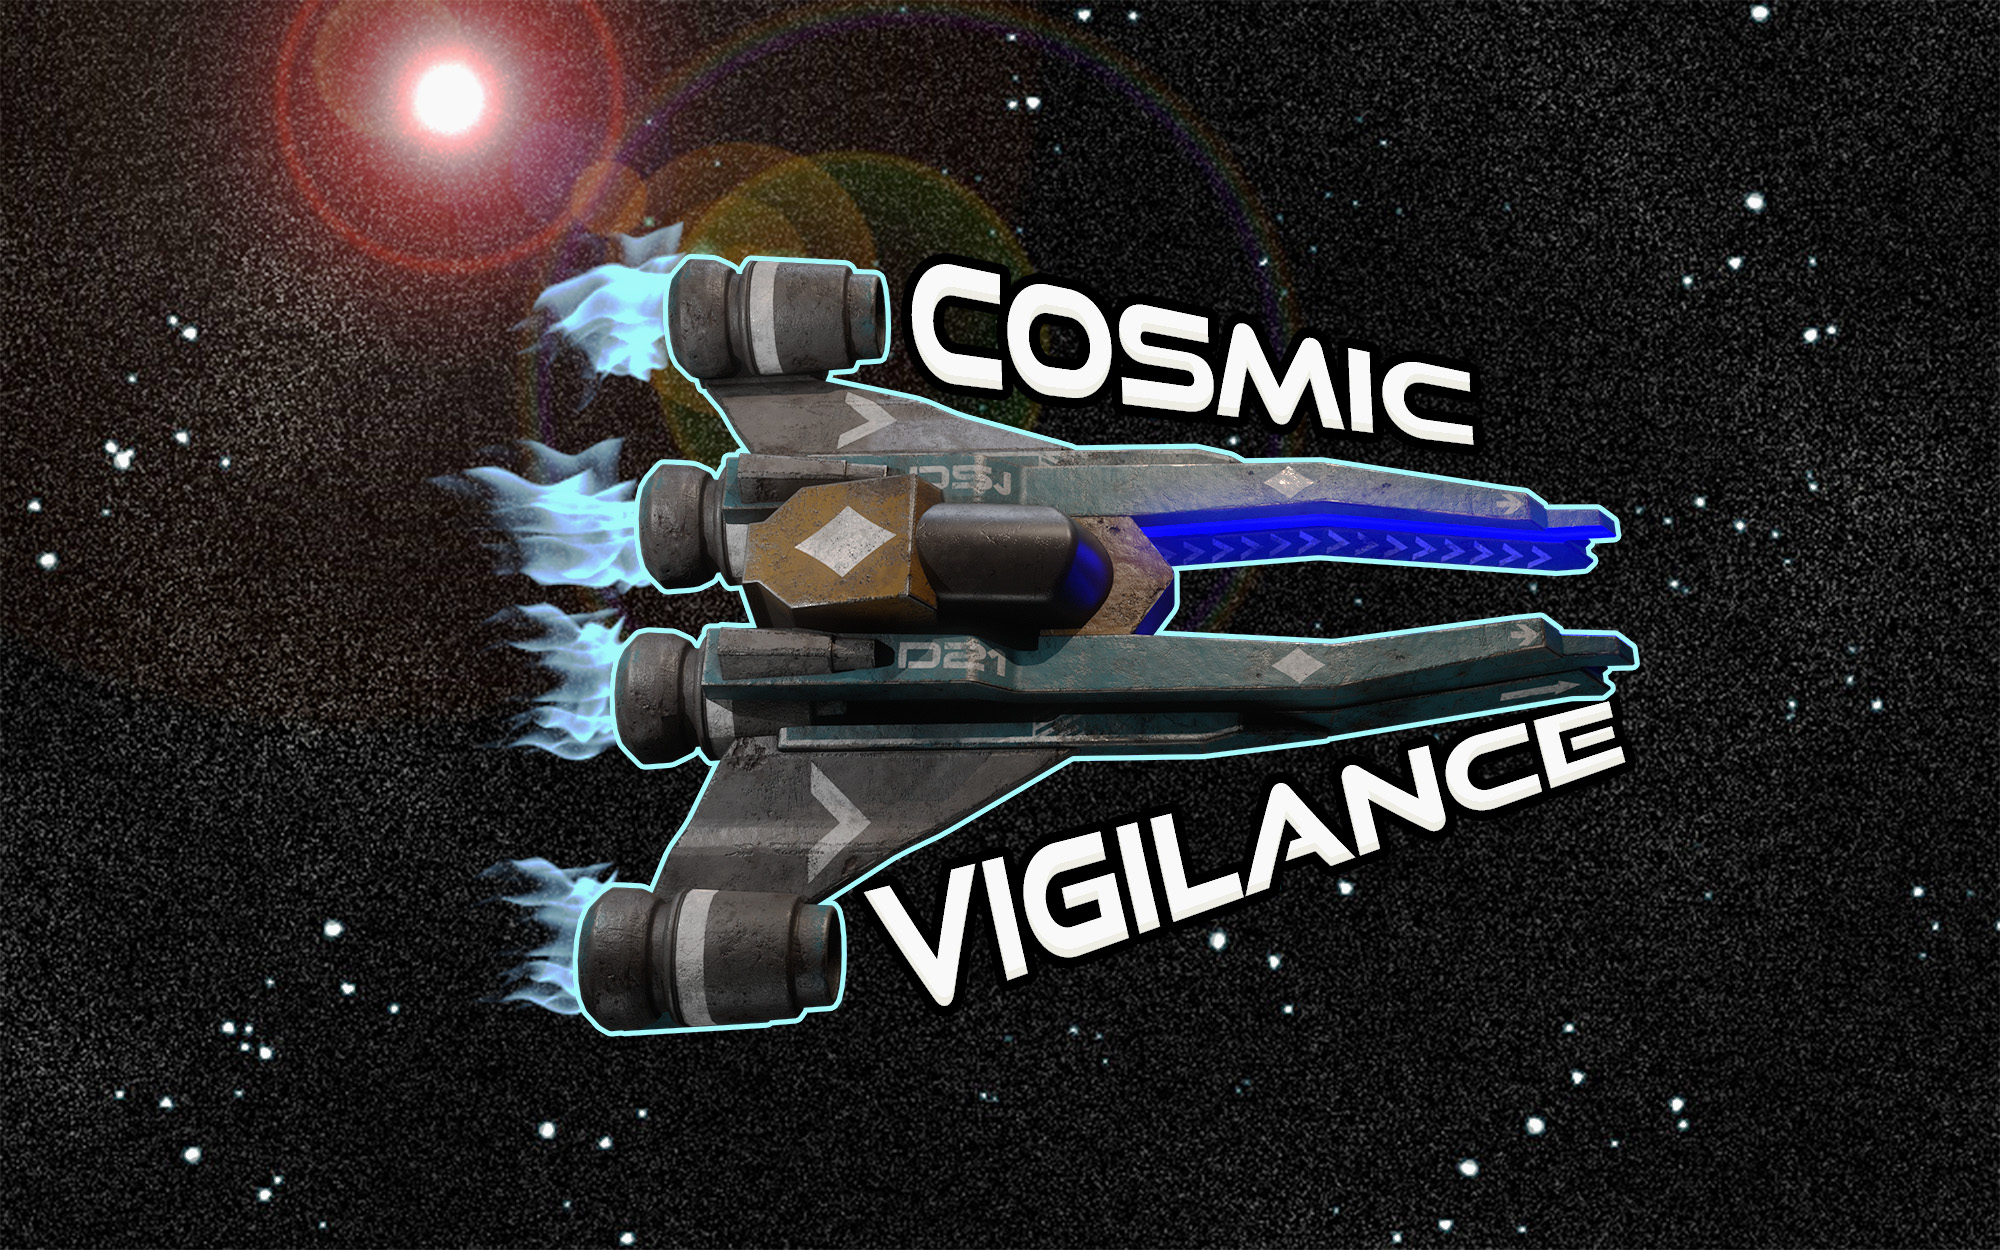 Cosmic Vigilance